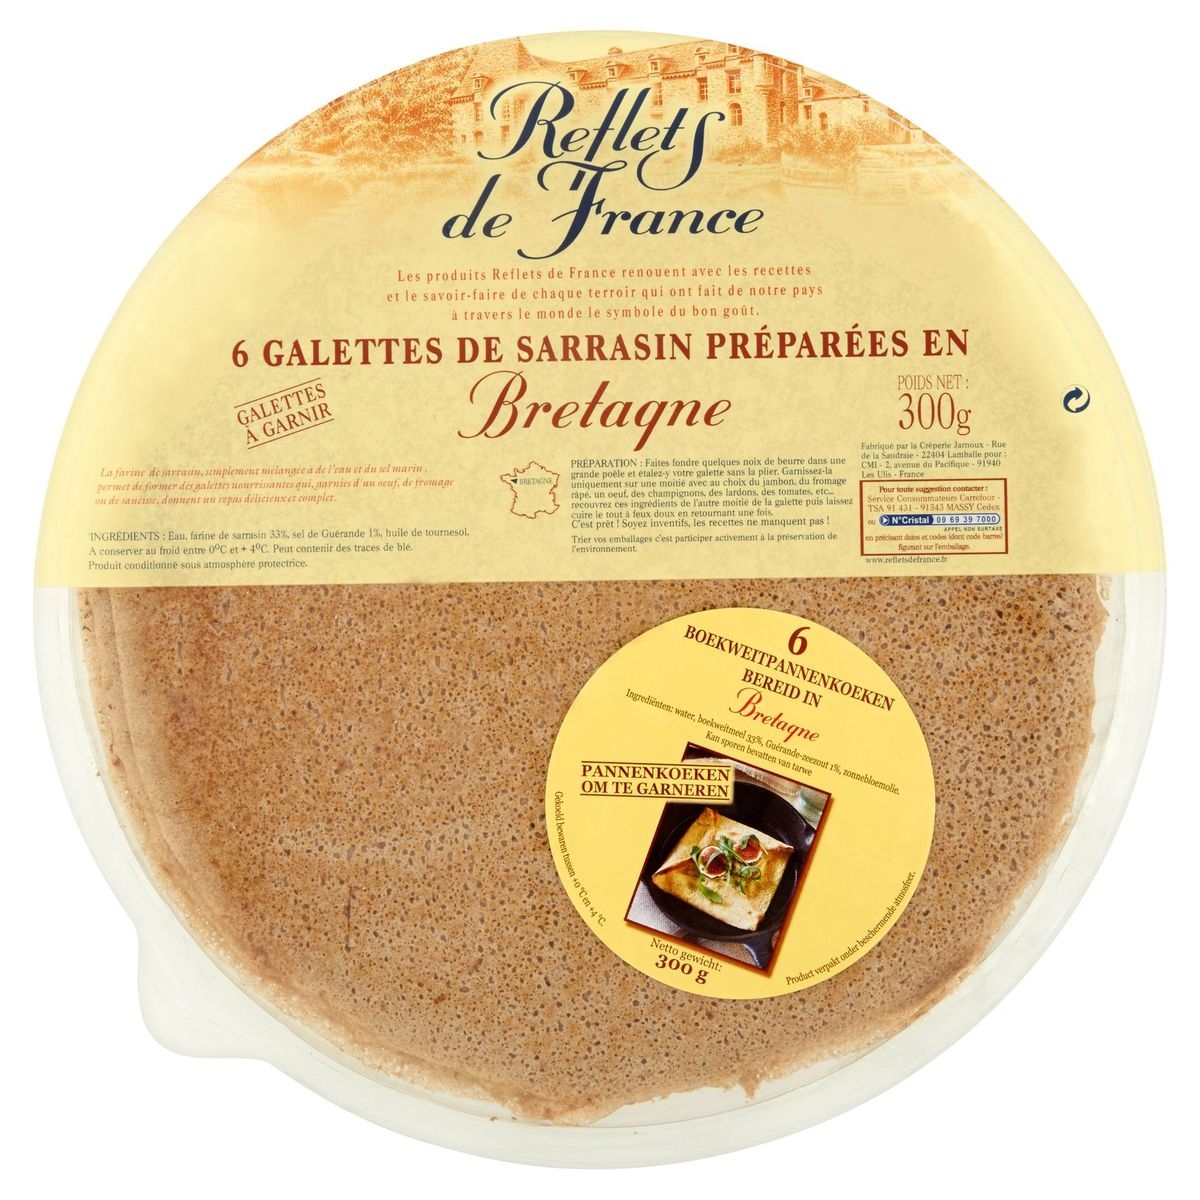 Galettes de sarrasin de Bretagne x 6 crêpes – Buckwheat pancakes from Brittany x 6, Reflets de France 300g – Chanteroy – Le Vacherin Deli